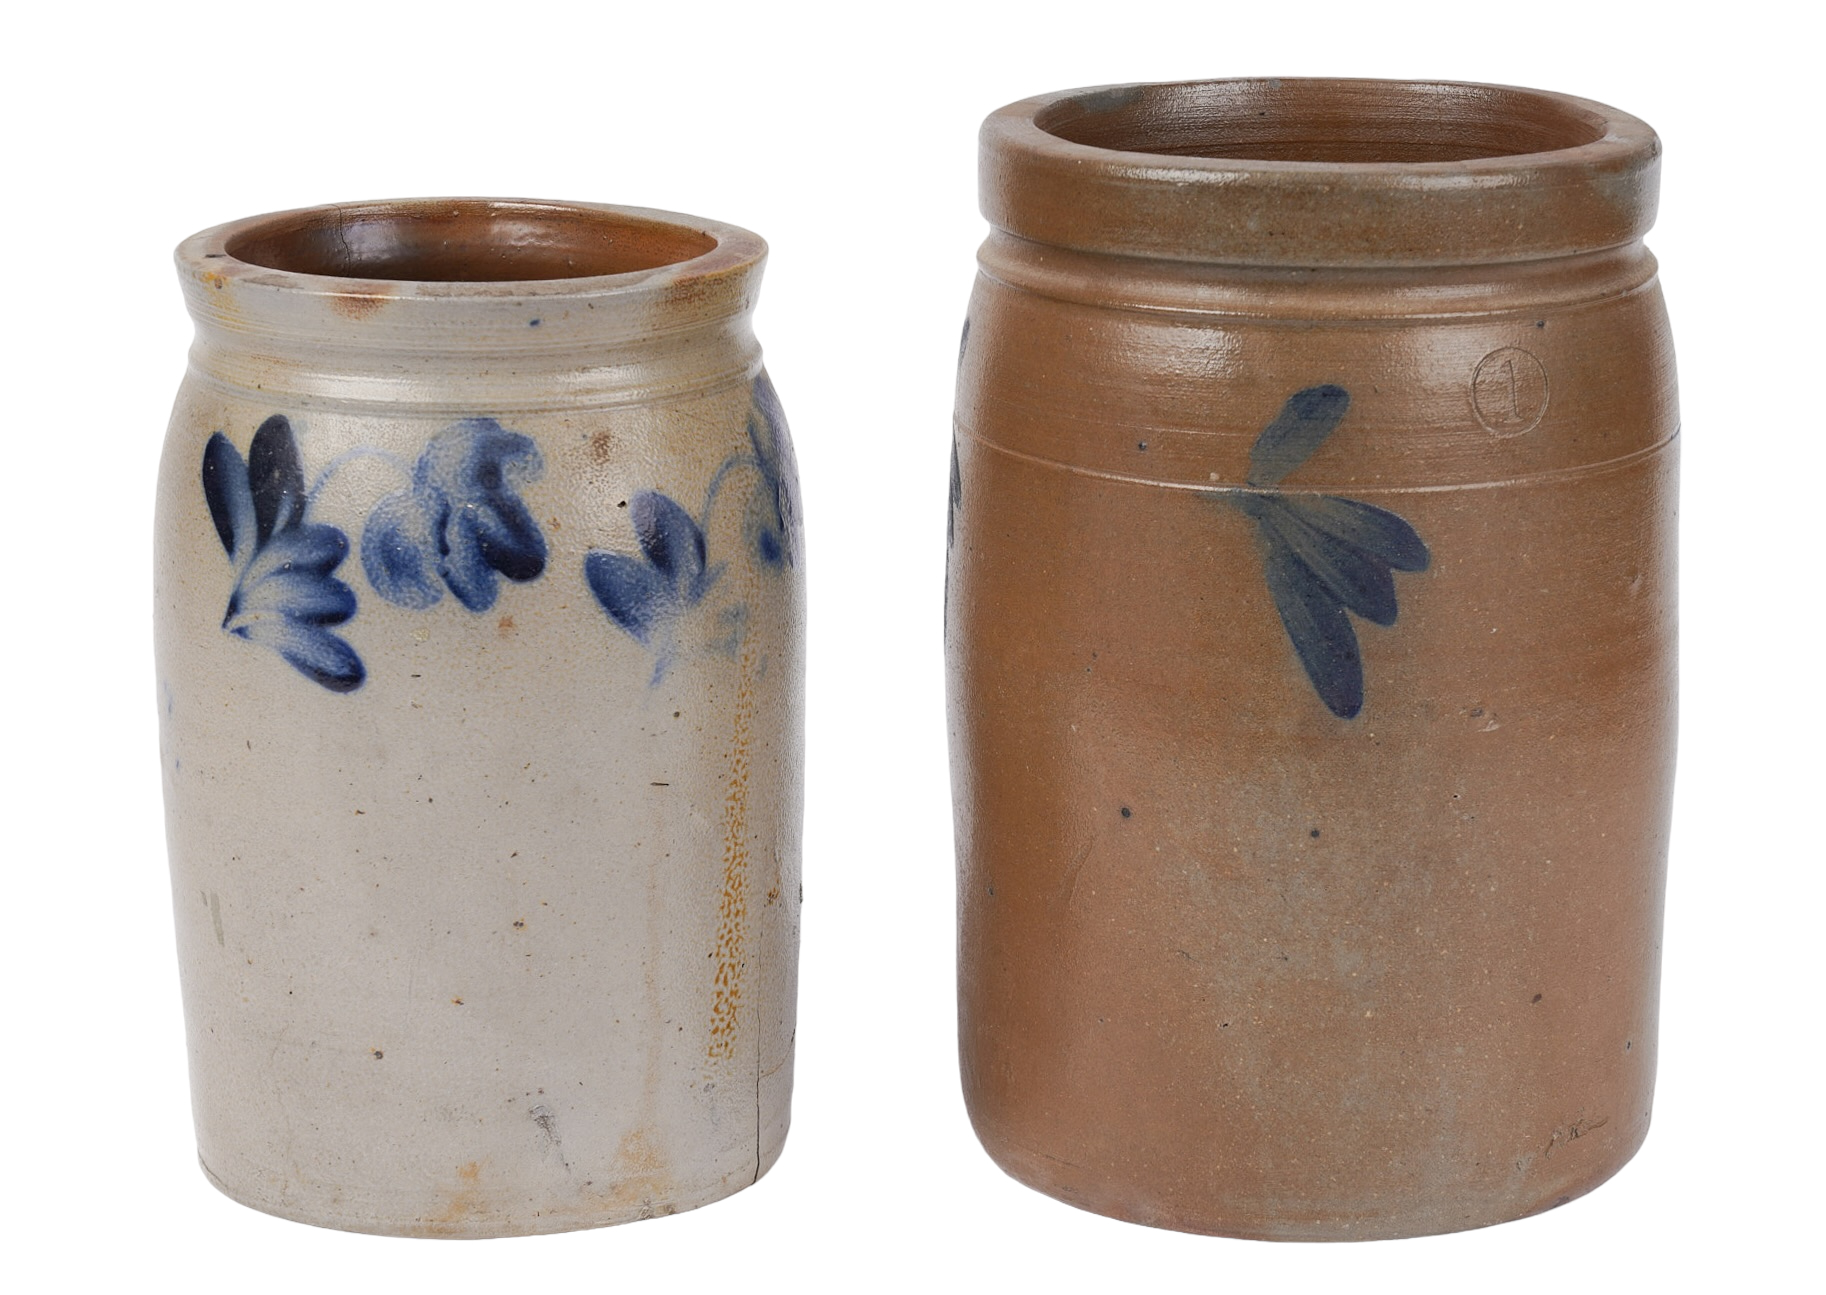  2 Blue decorated stoneware jars  2e207e